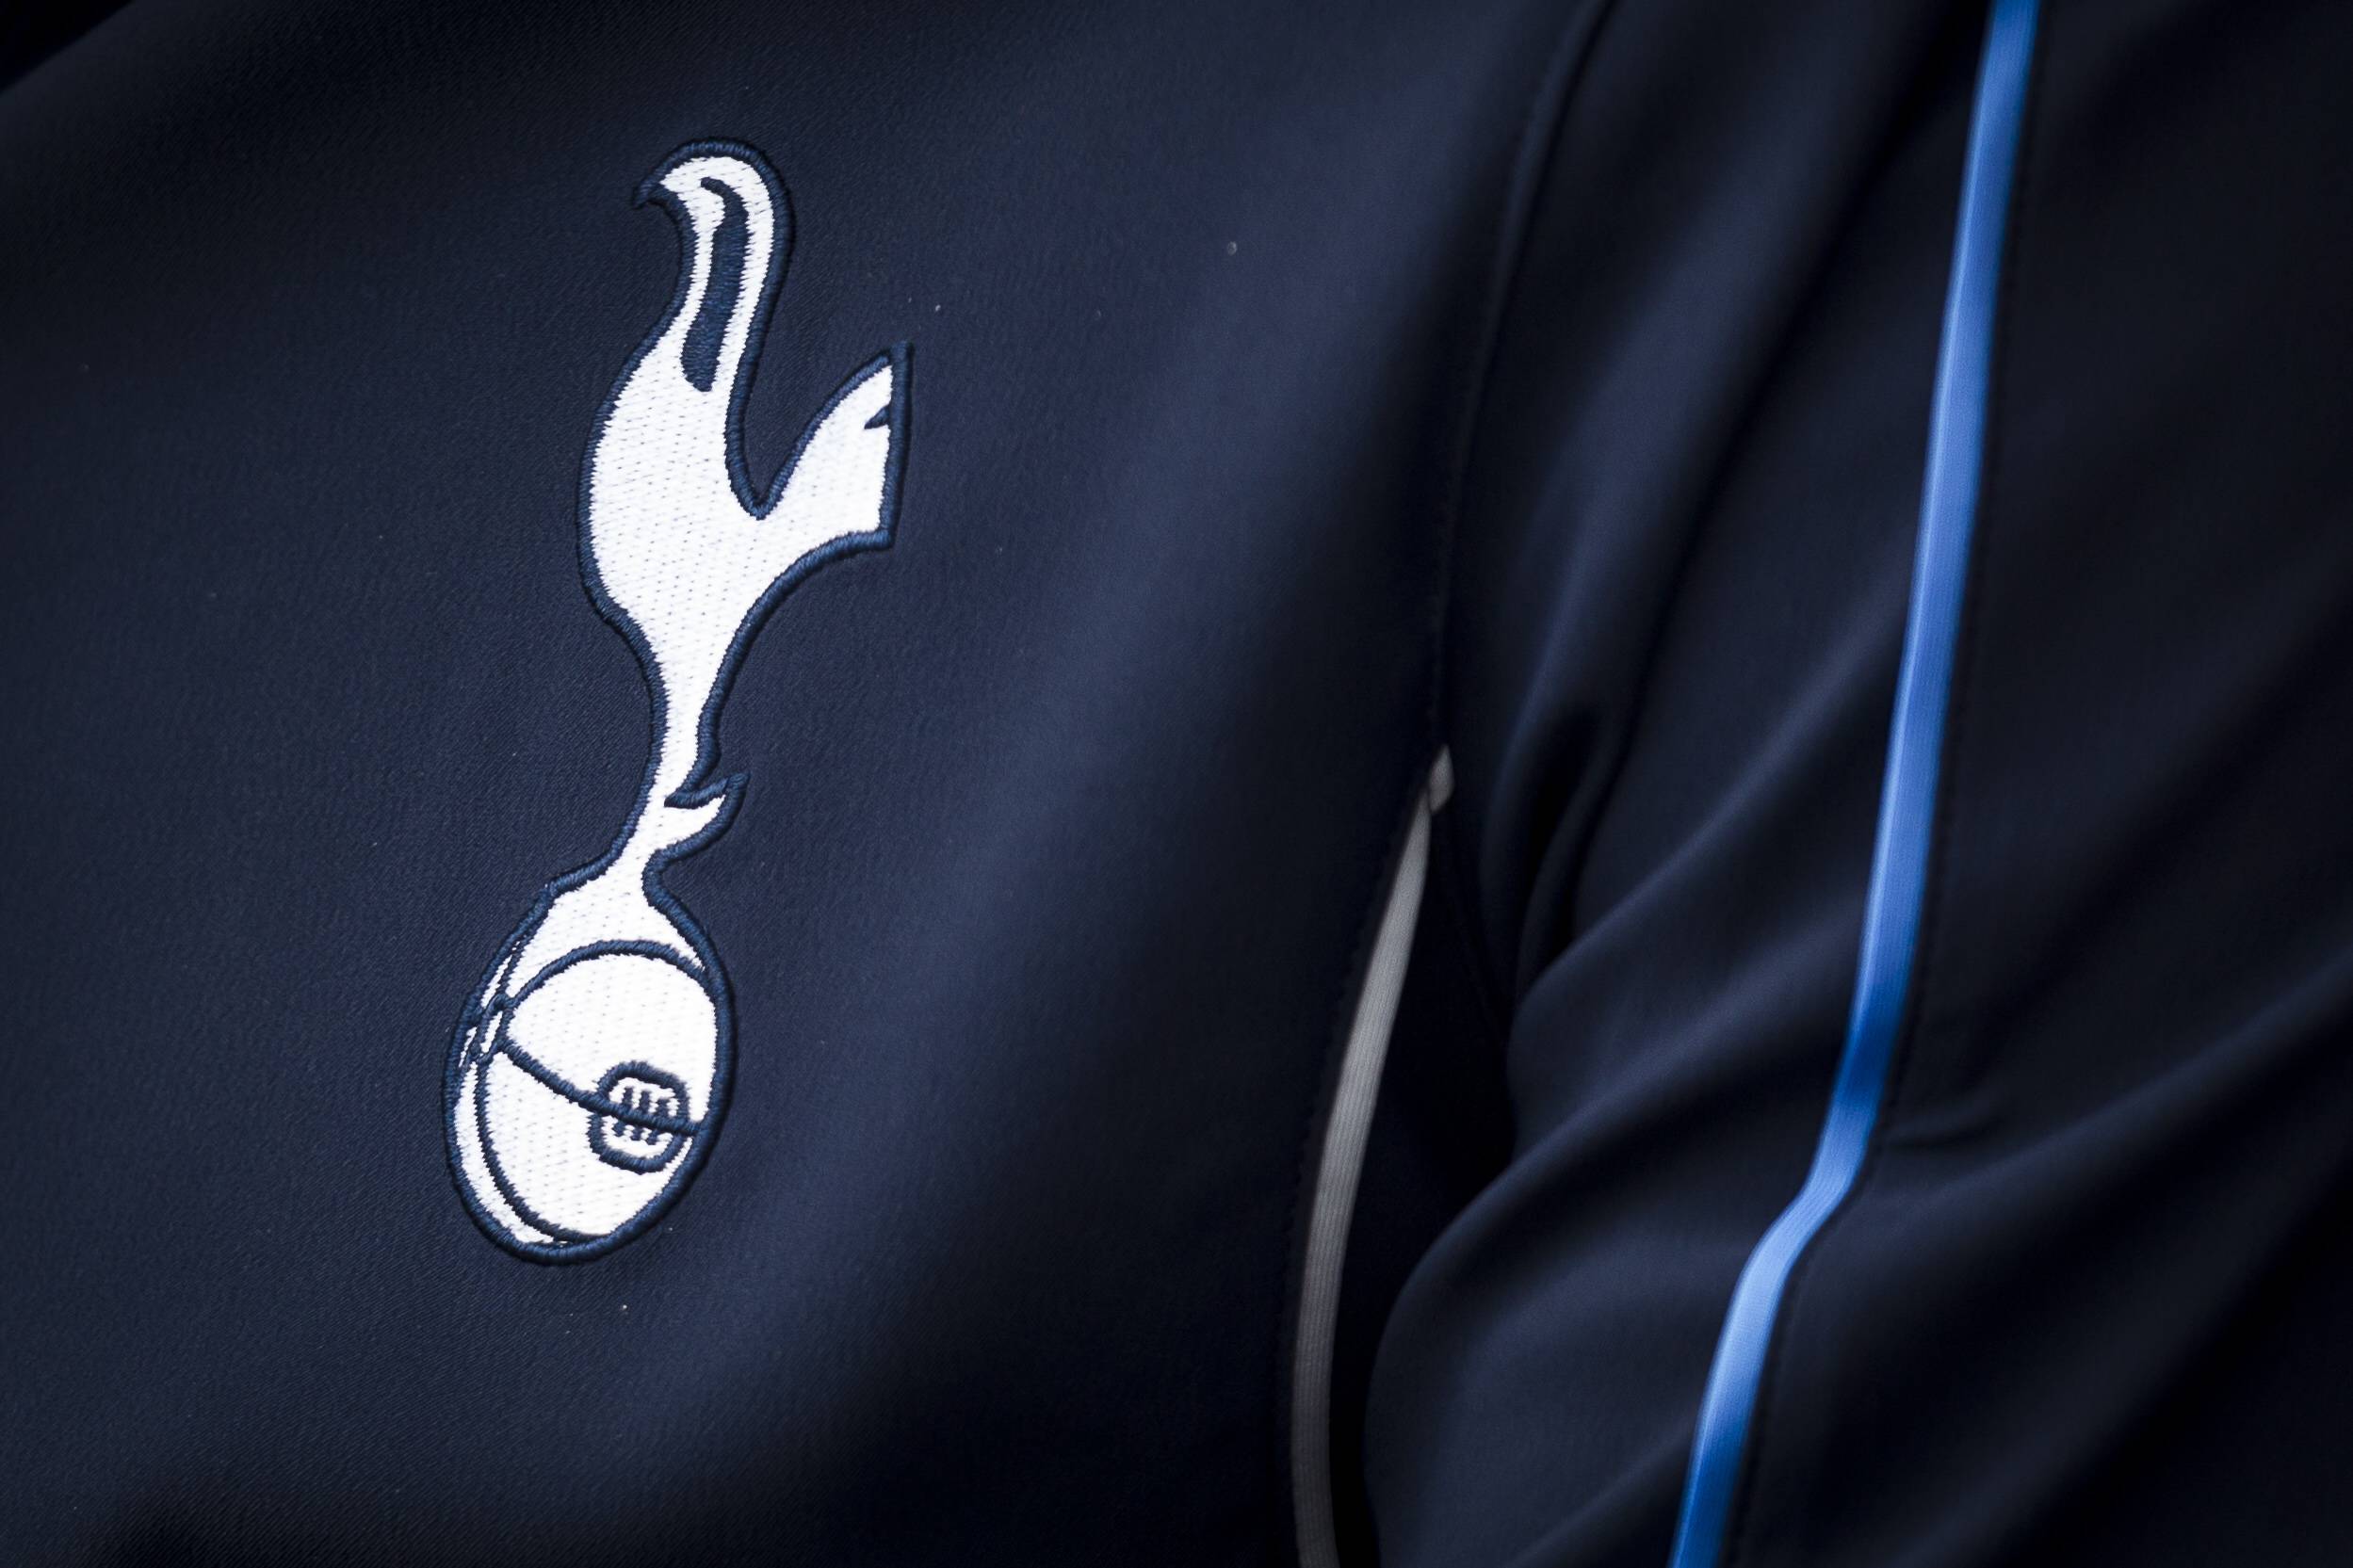 The Tottenham Hotspur club badge.